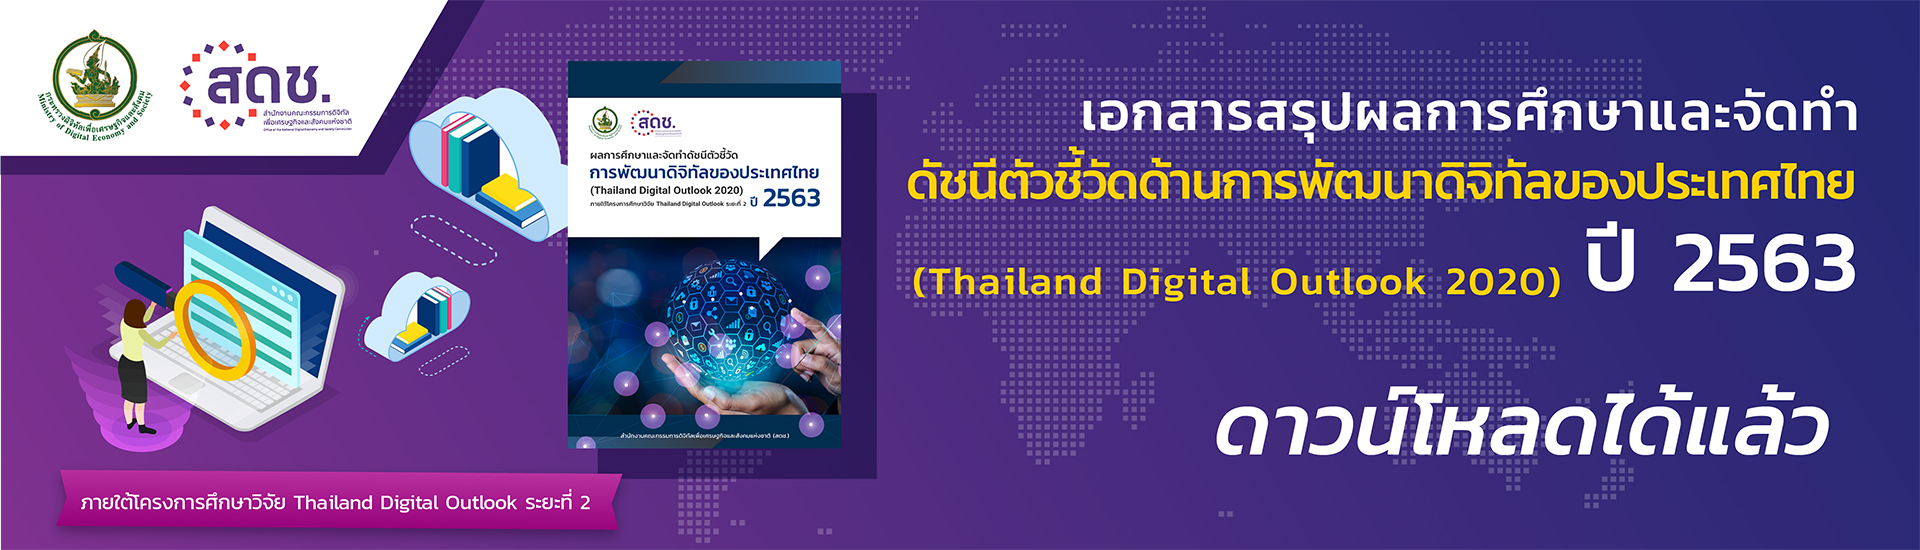 Thailand Digital Outlook 2020